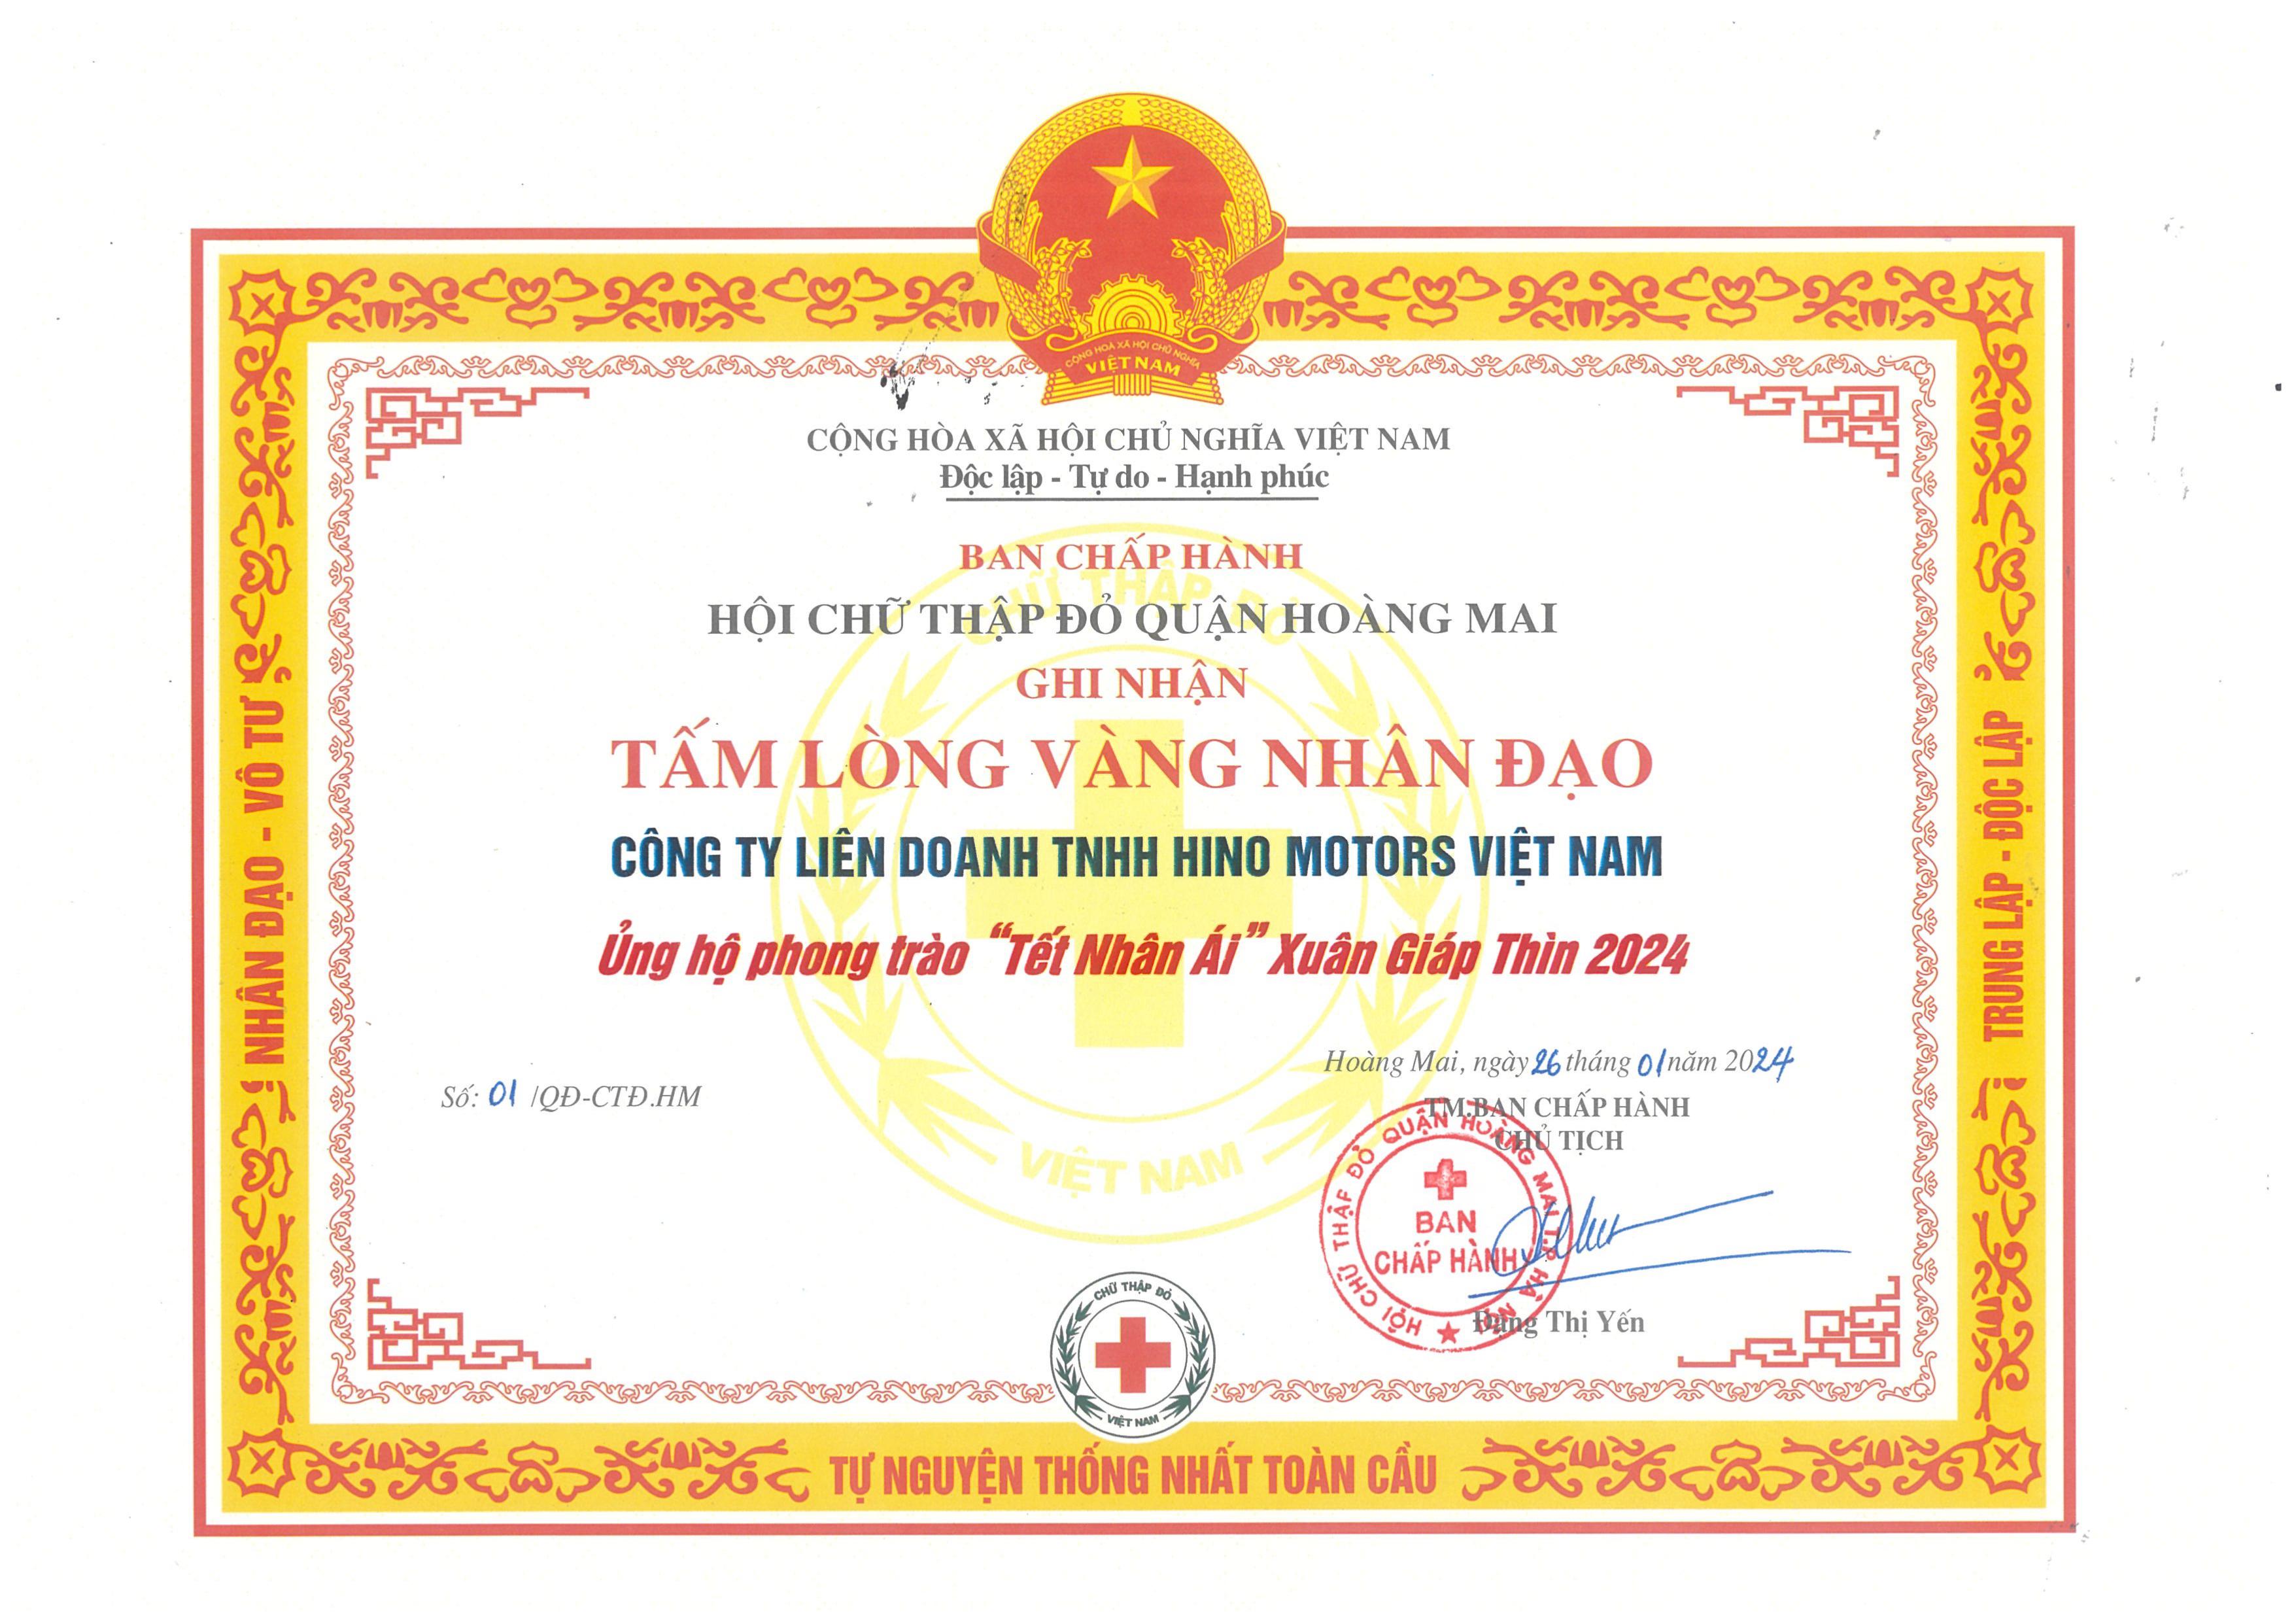 Recognizing the Humanitarian Golden Heart for Hino Motors Vietnam.